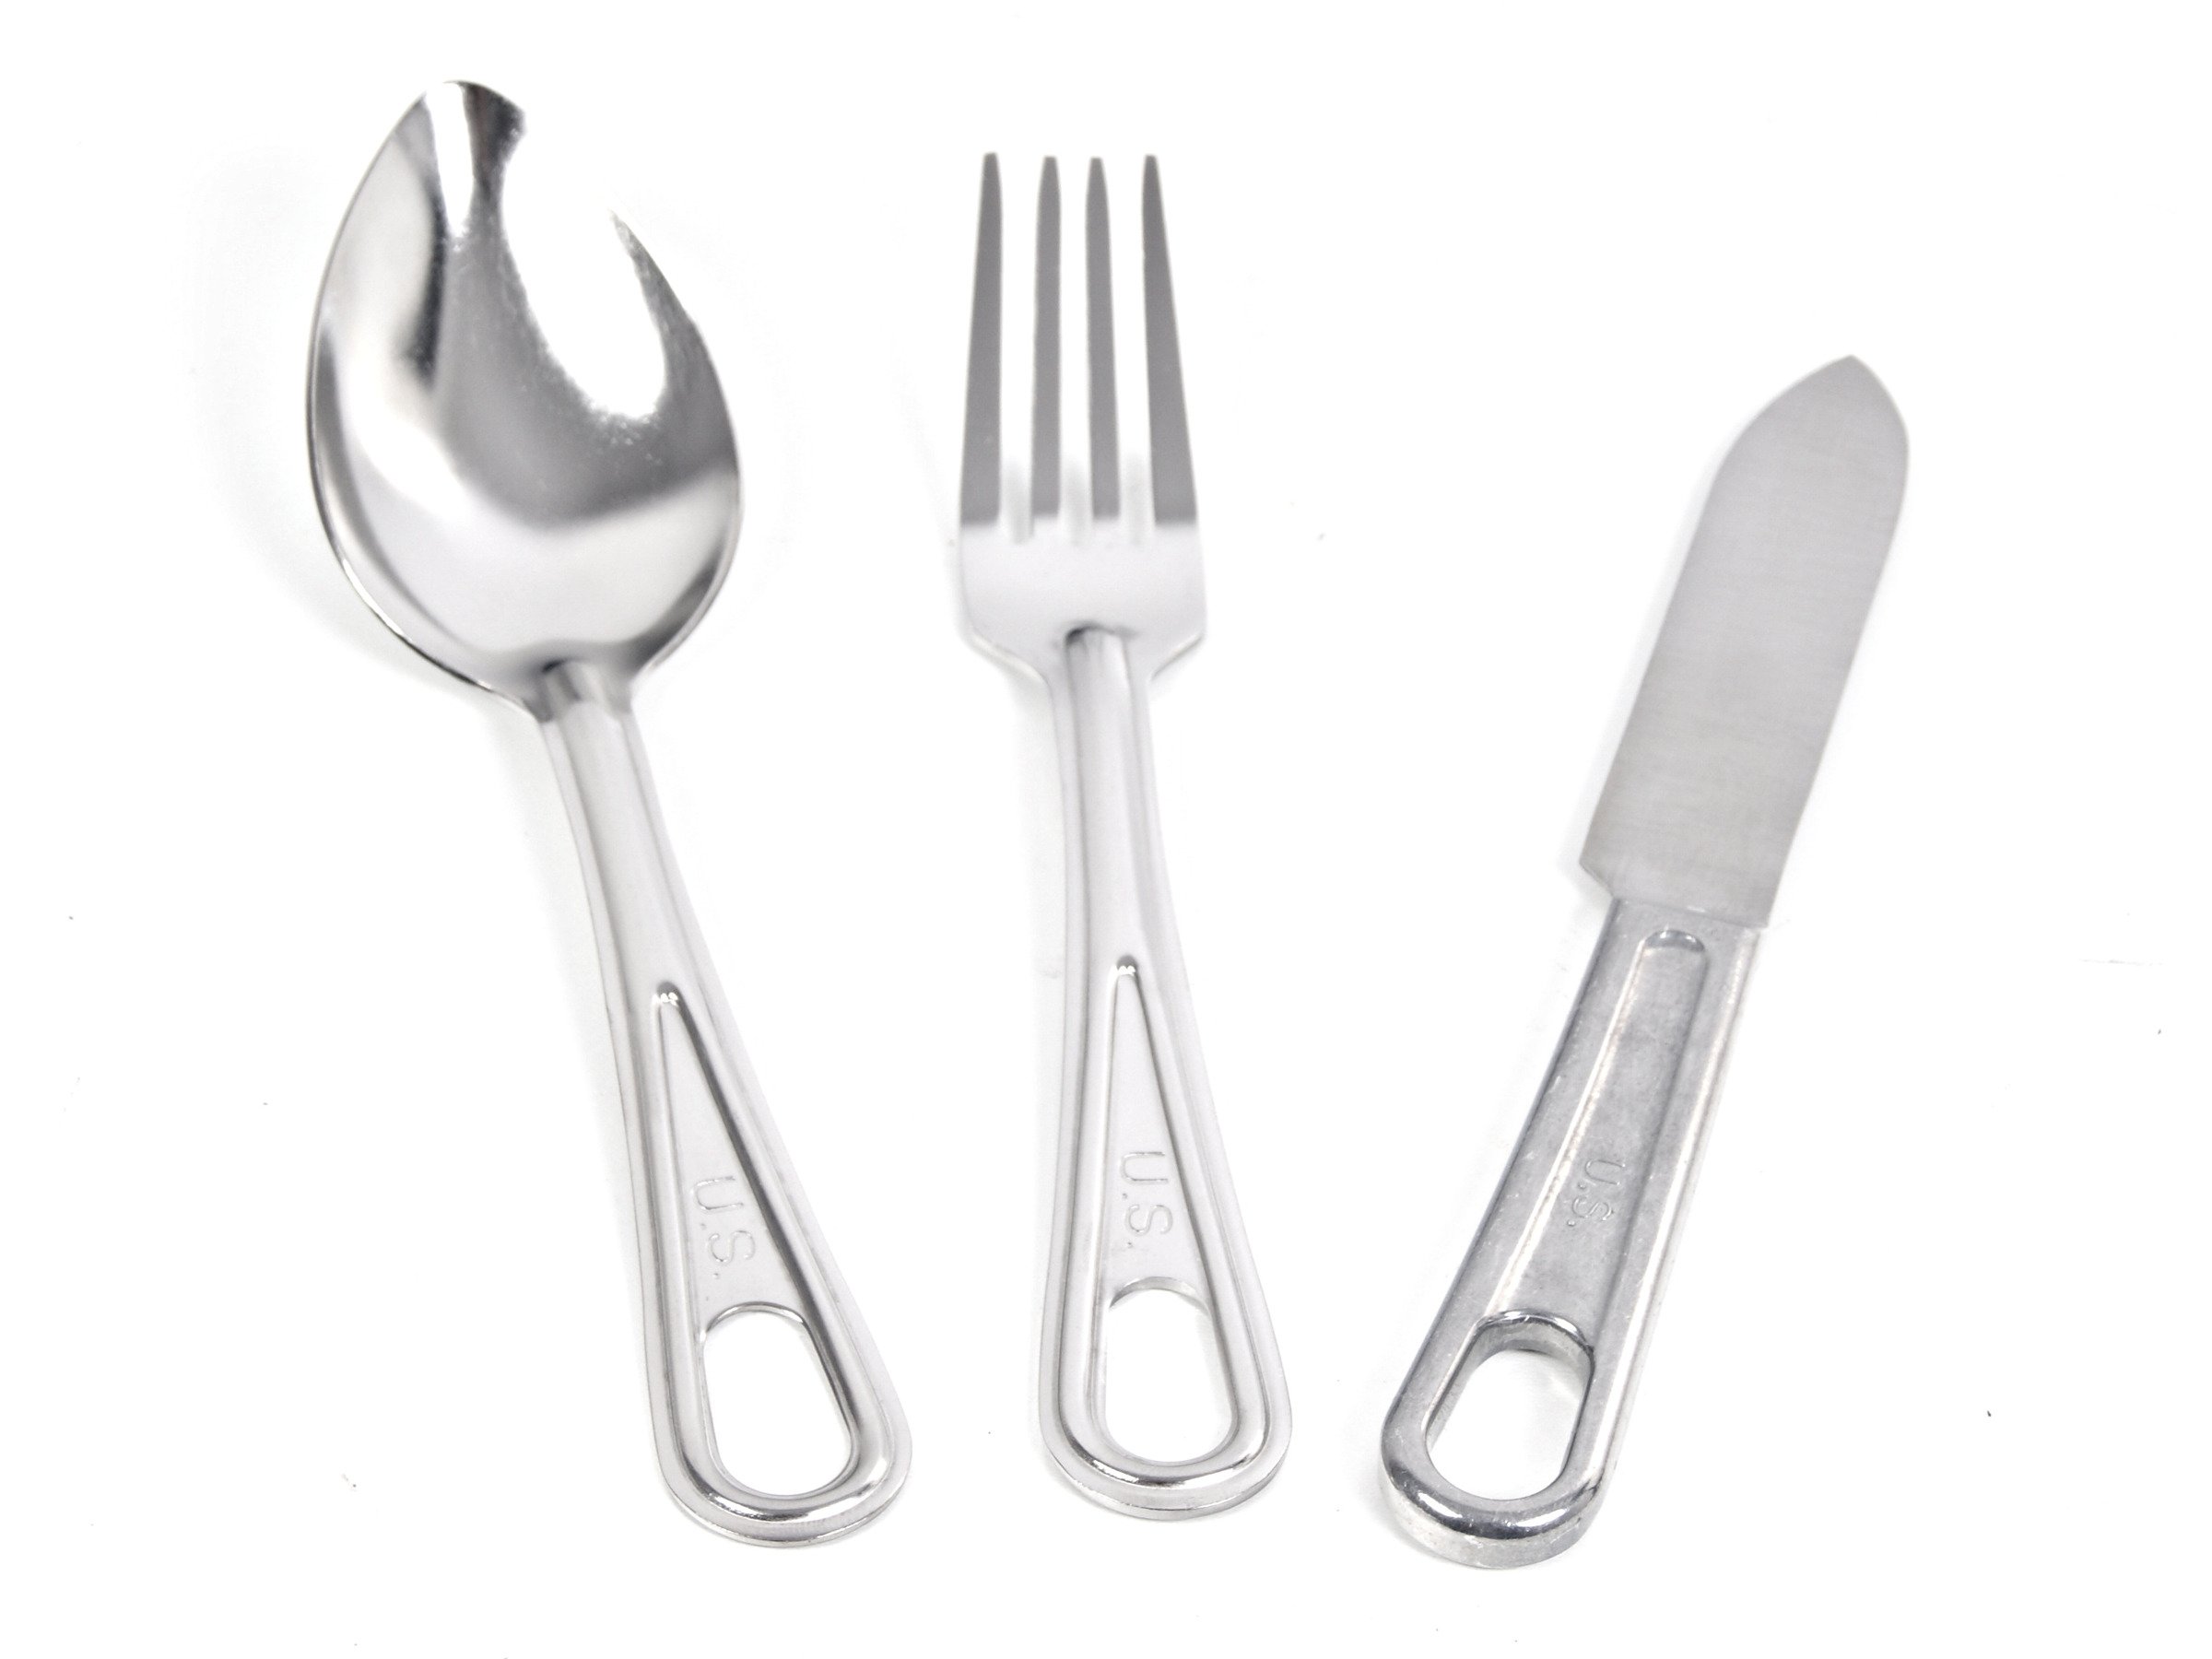 https://nestof.pl/eng_pl_U-S-Fork-Spoon-Knife-set-repro-5980_1.jpg